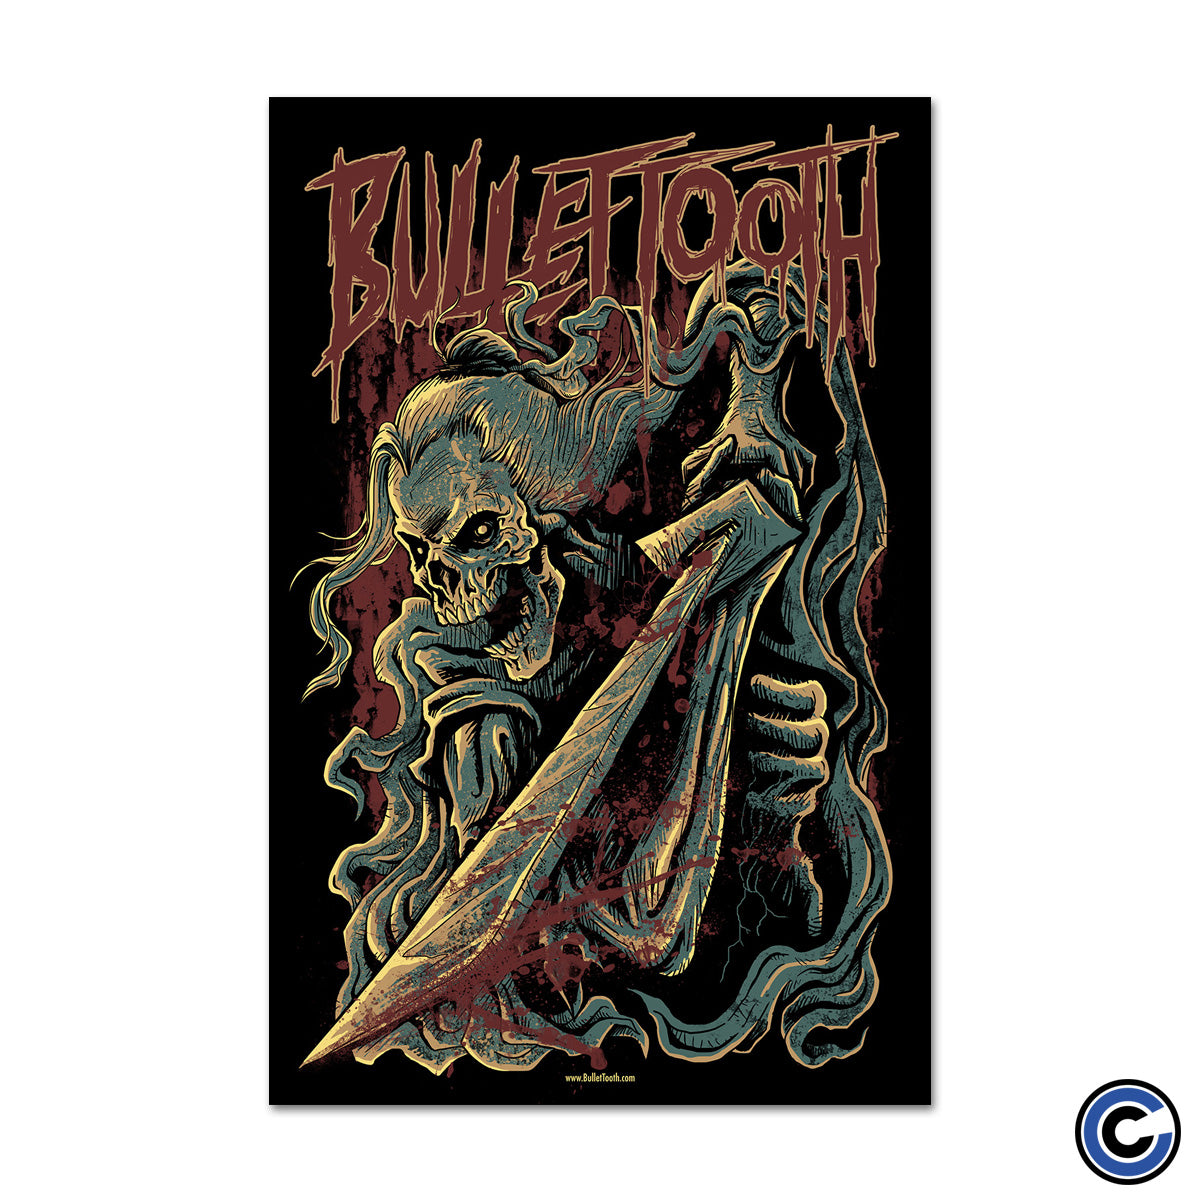 Bullet Tooth "Samurai" Poster